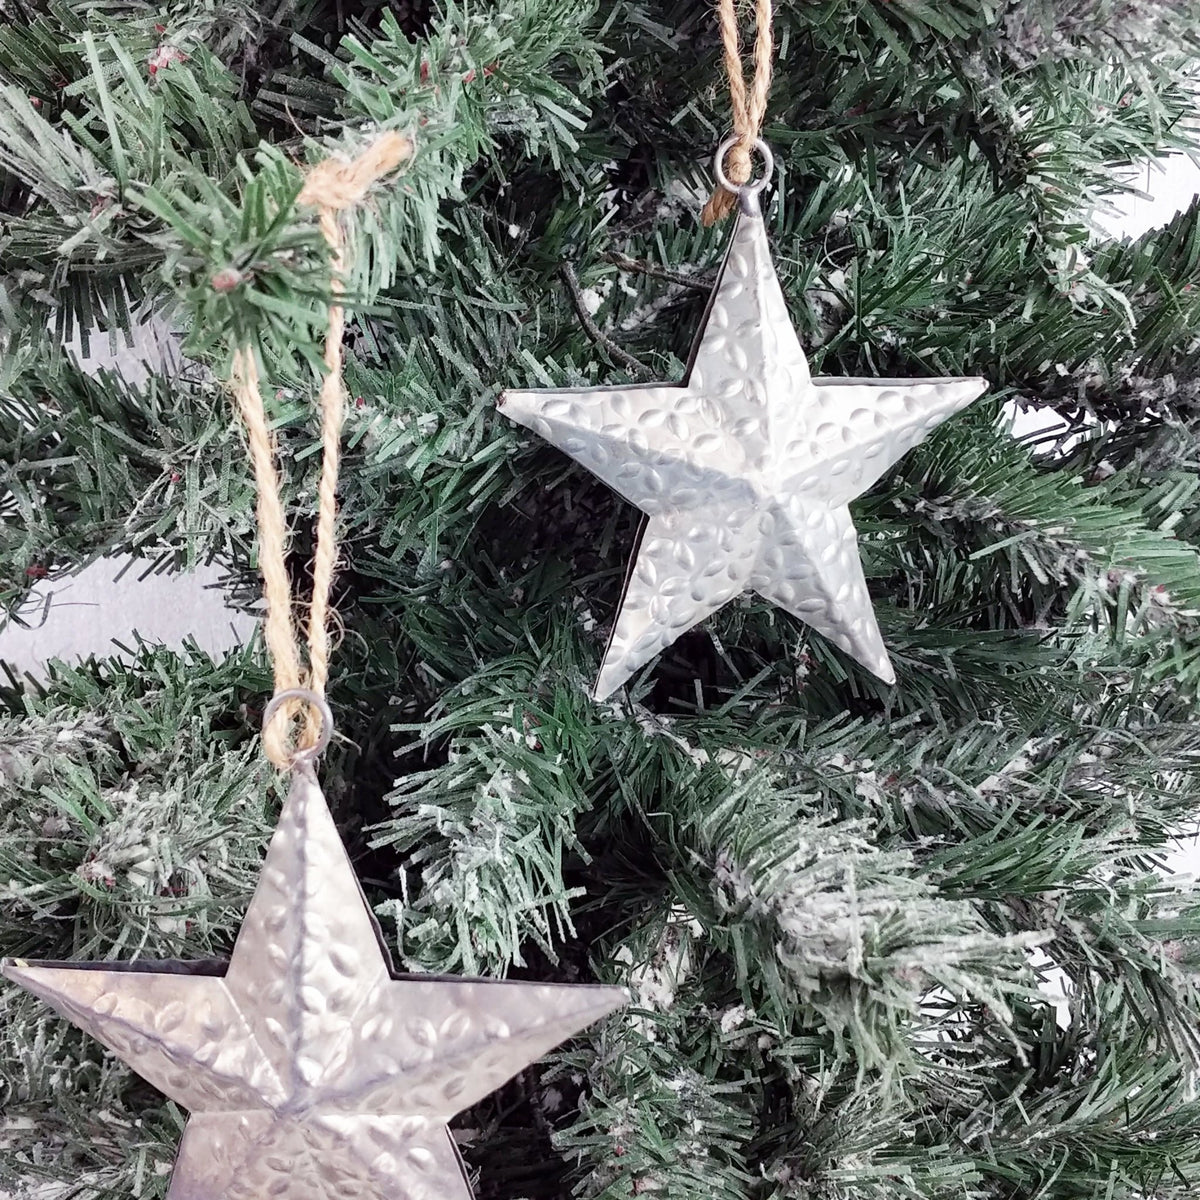 Decorative Metal Hanging Star on Christmas Tree close up